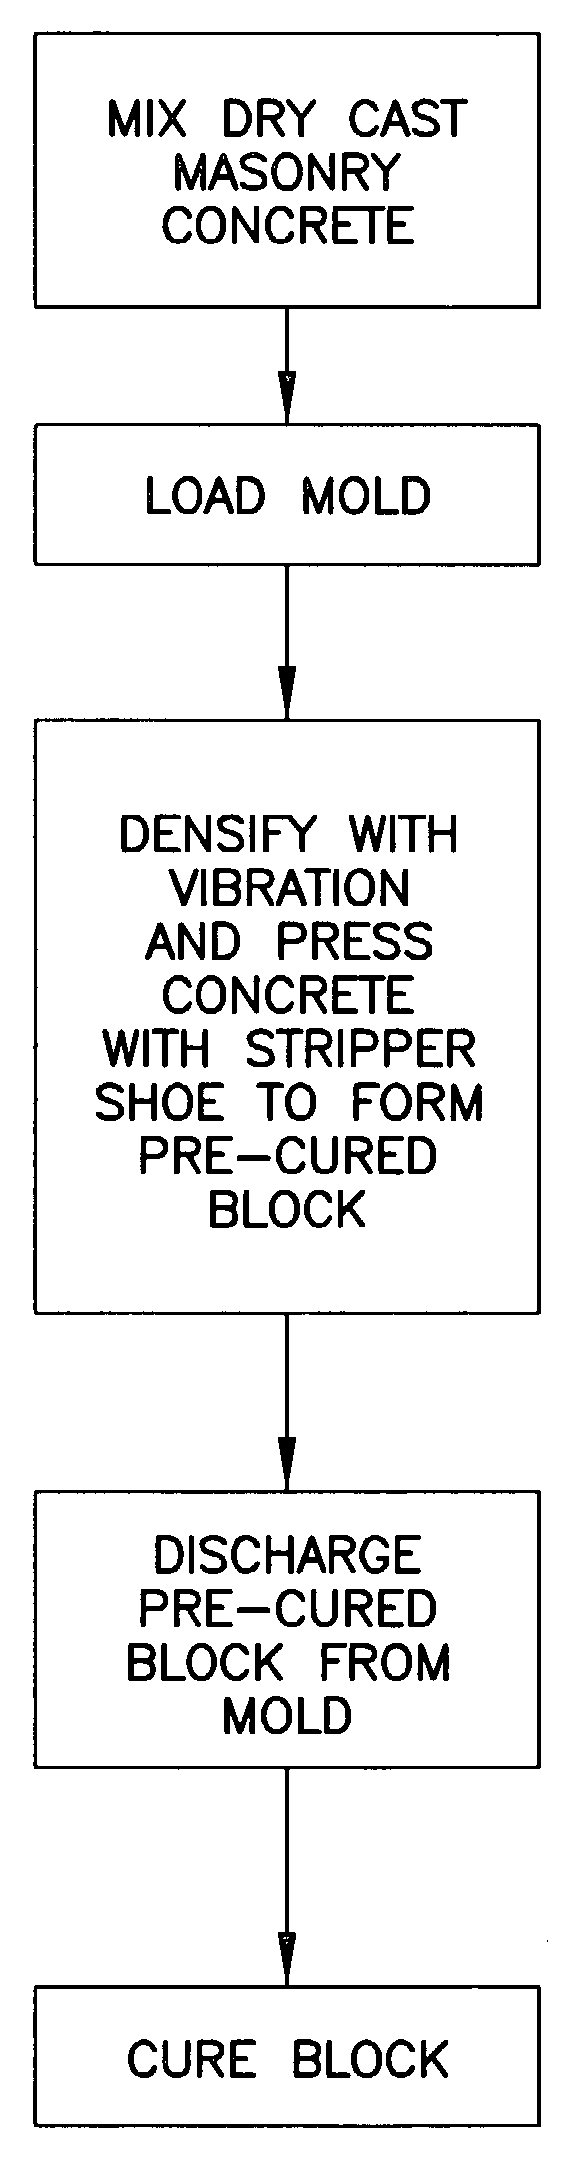 Concrete block and method of making same